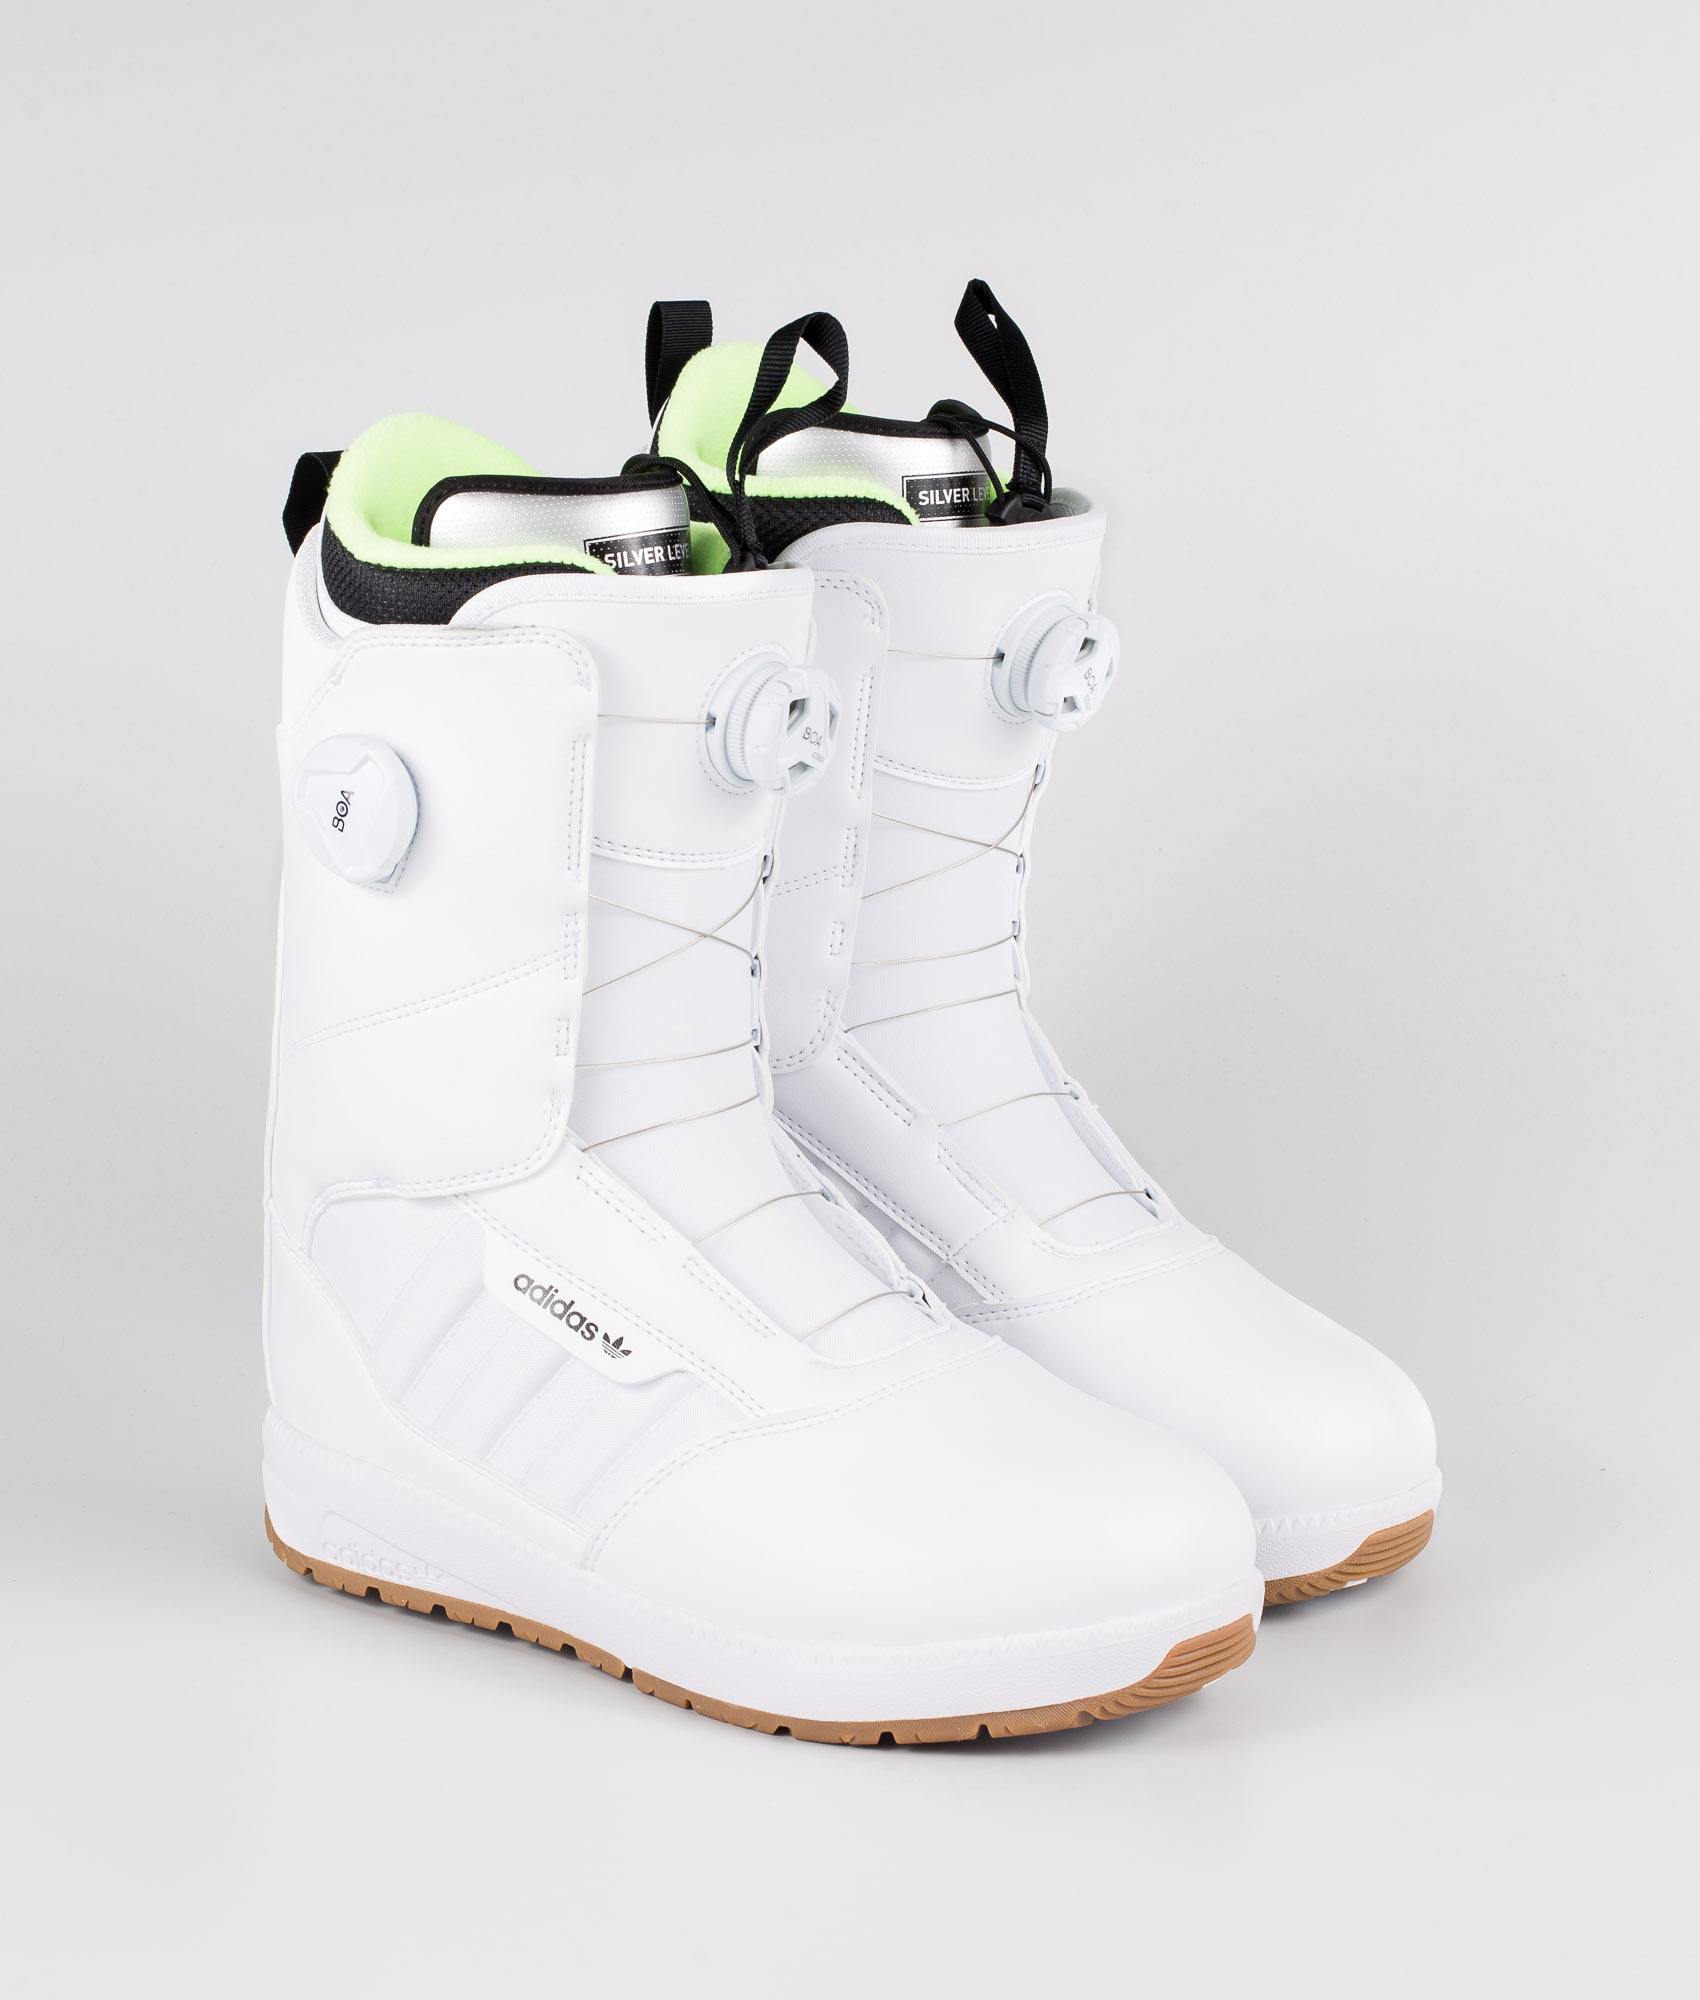 adidas response adv snowboard boots